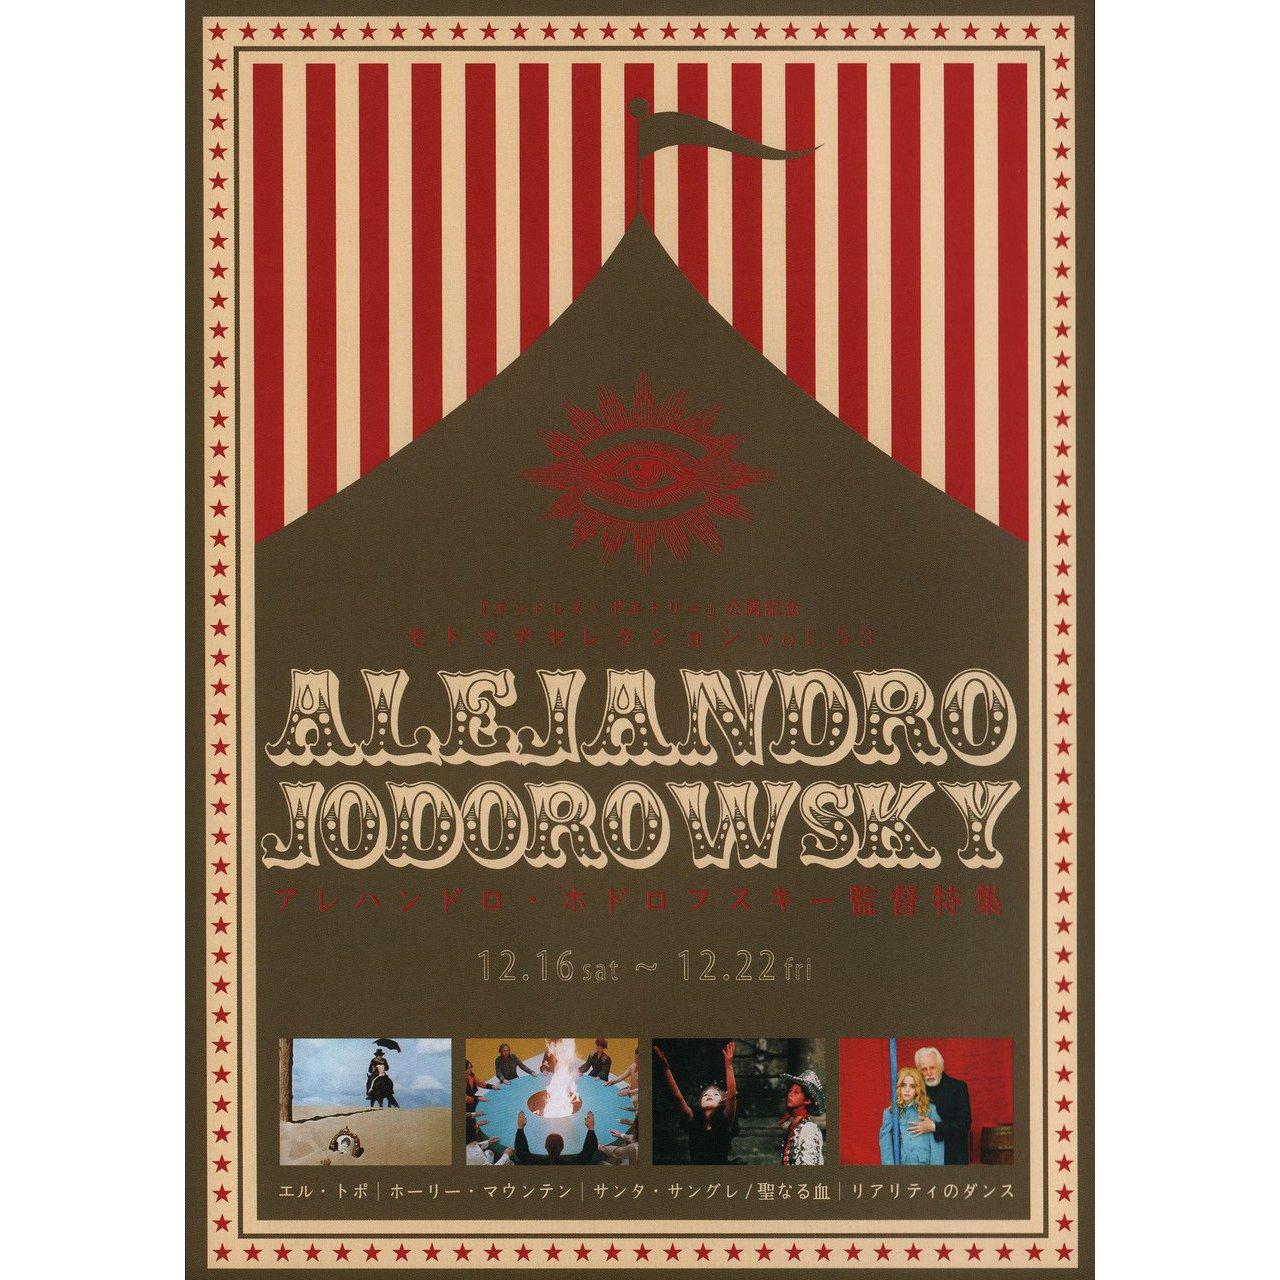 Festival Alejandro Jodorowsky 2017 Dépliant japonais B5 Chirashi Bon état - En vente à New York, NY